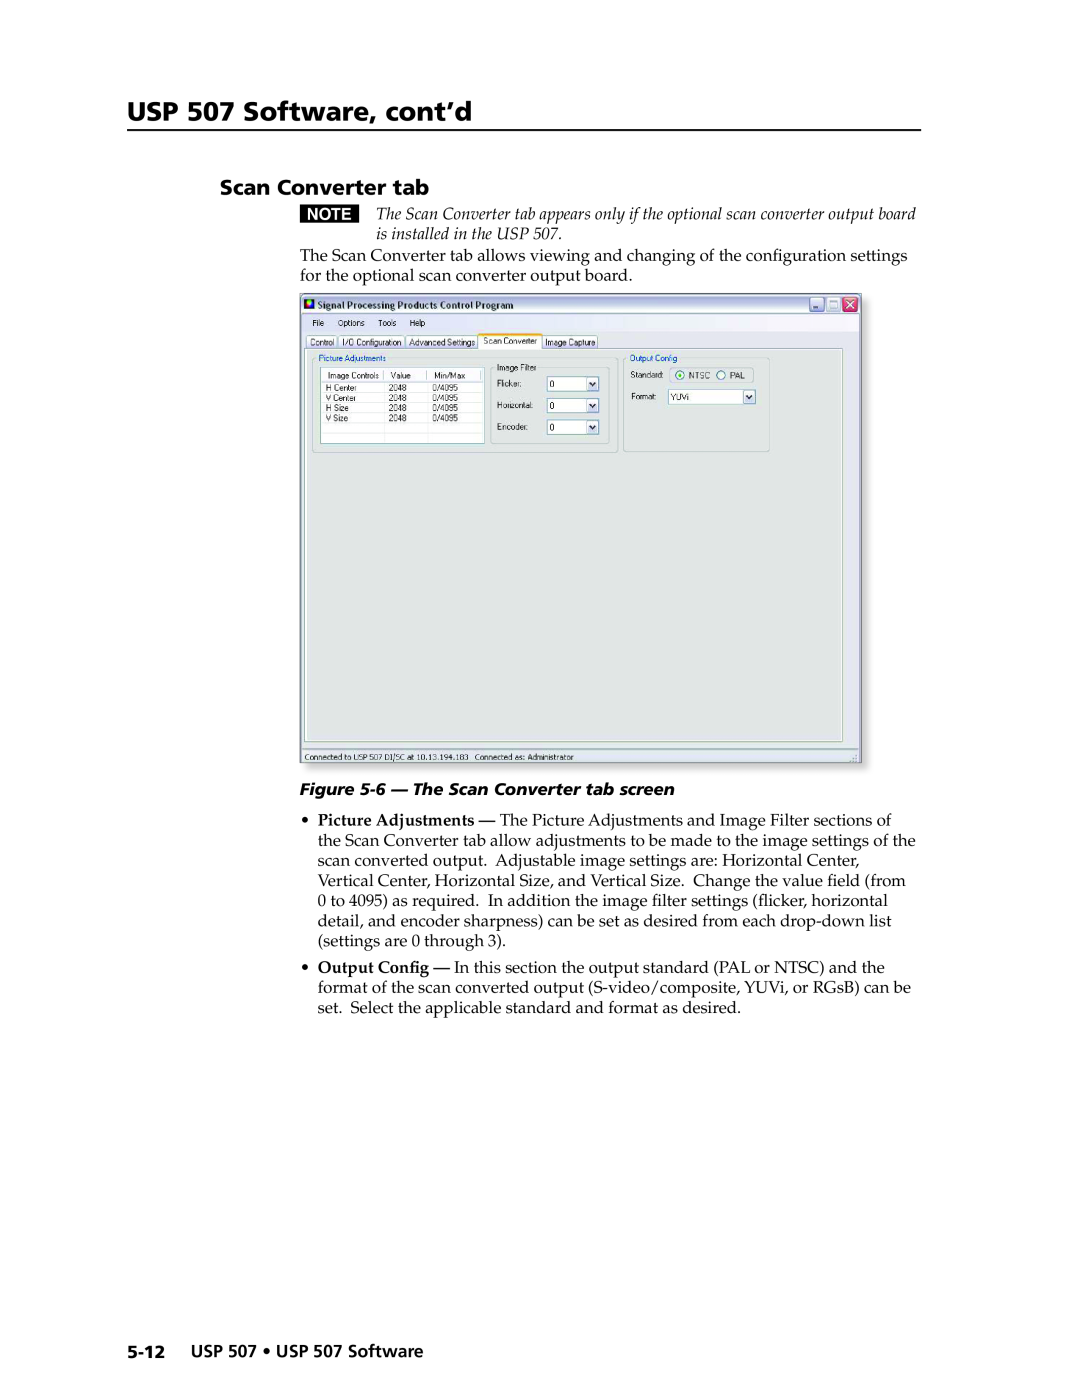 Extron electronic manual USP 507 Software, cont’d, 6— The Scan Converter tab screen, 5-12USP 507 • USP 507 Software 